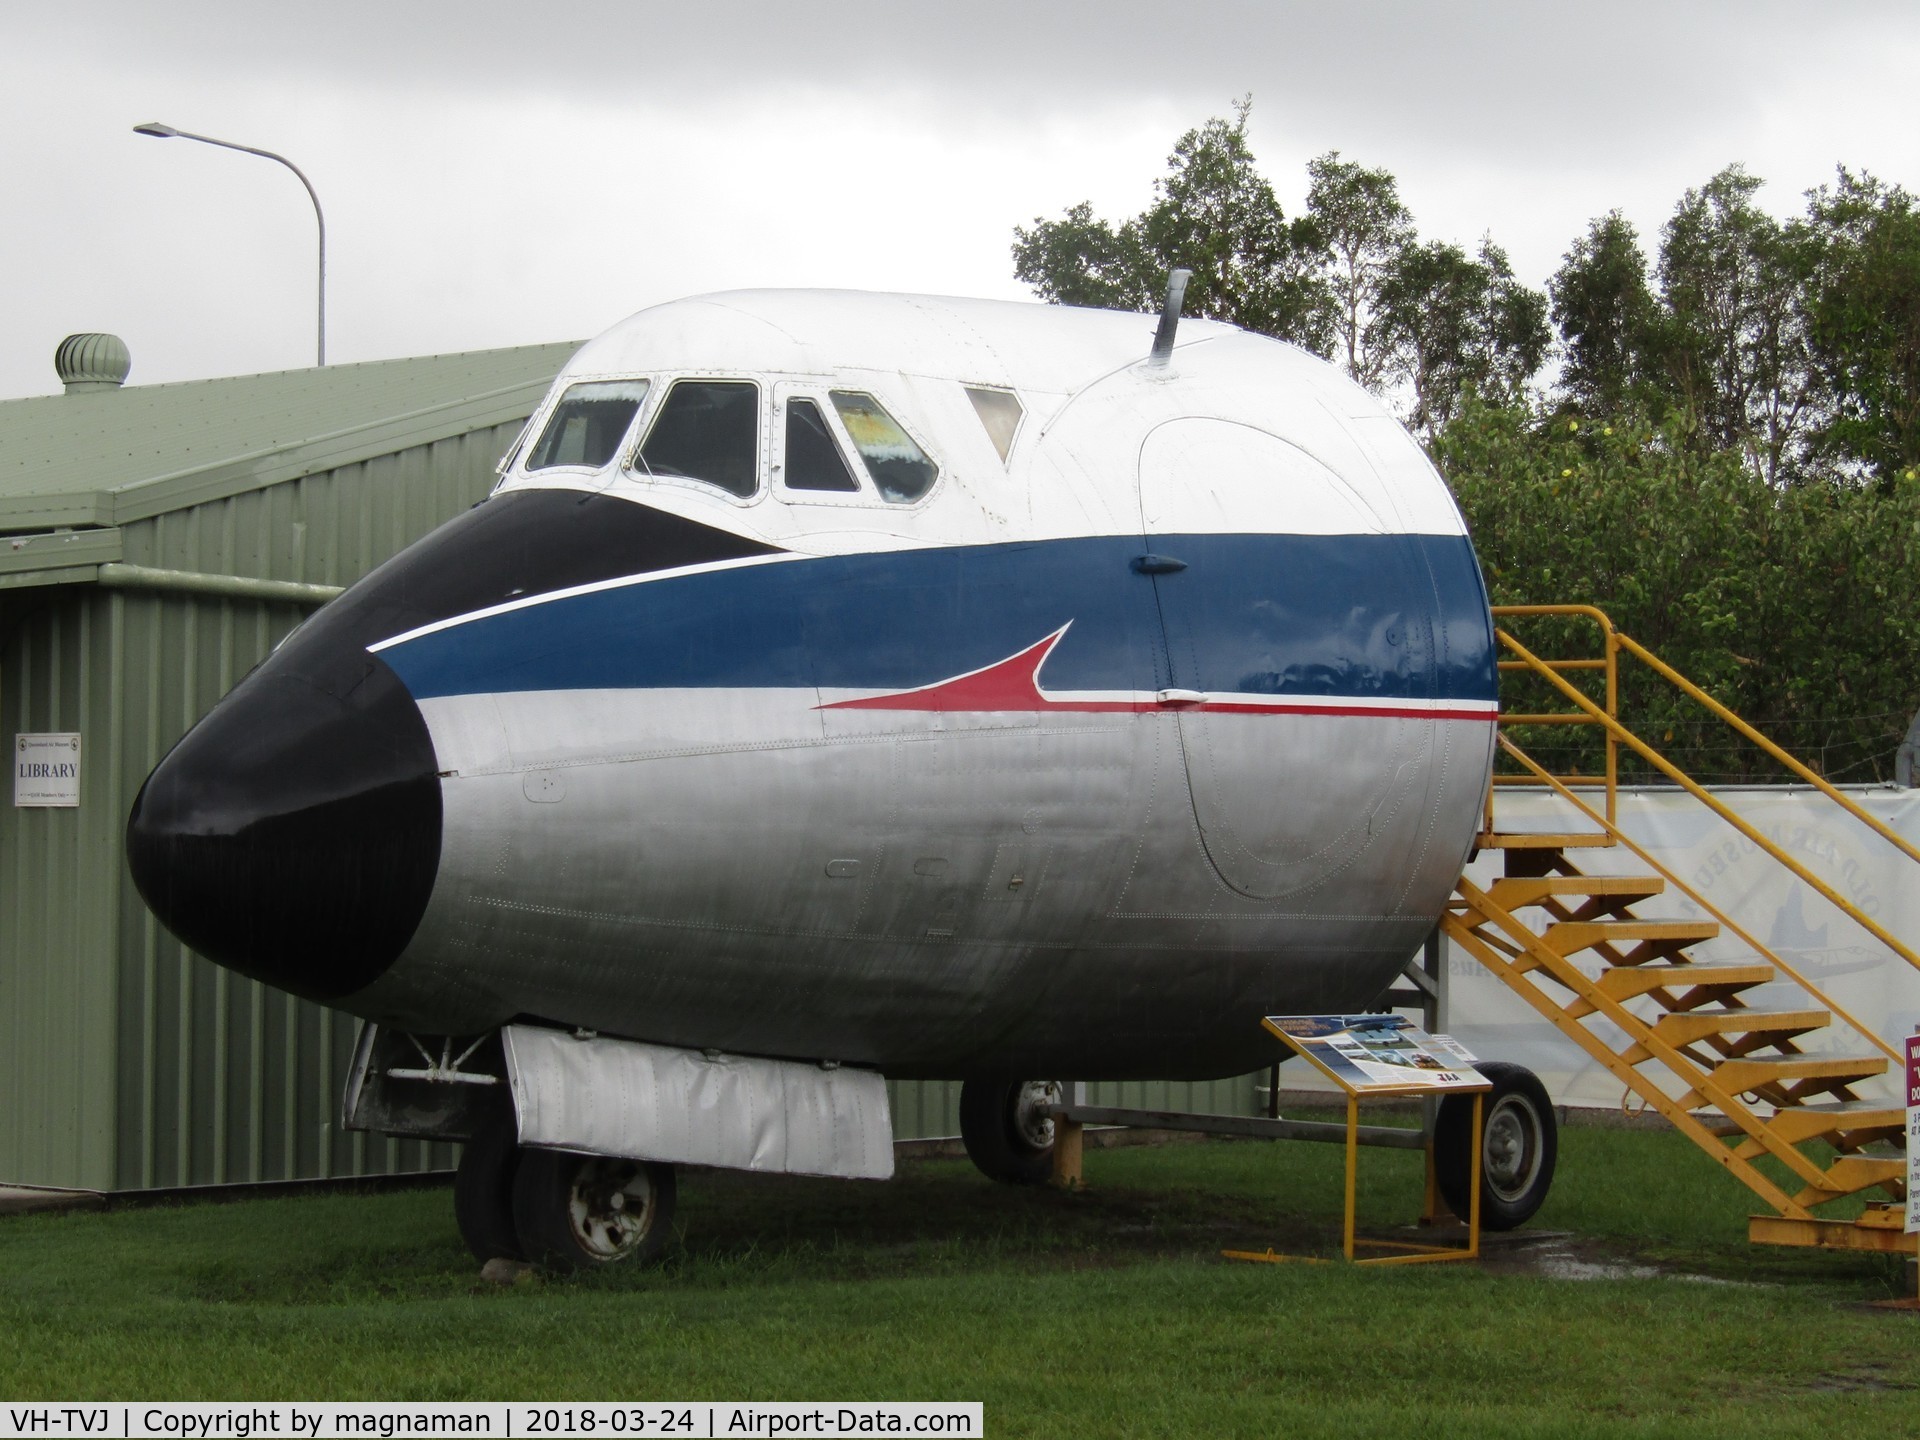 VH-TVJ, 1956 Vickers Viscount 756D C/N 148, At caloundra musuem